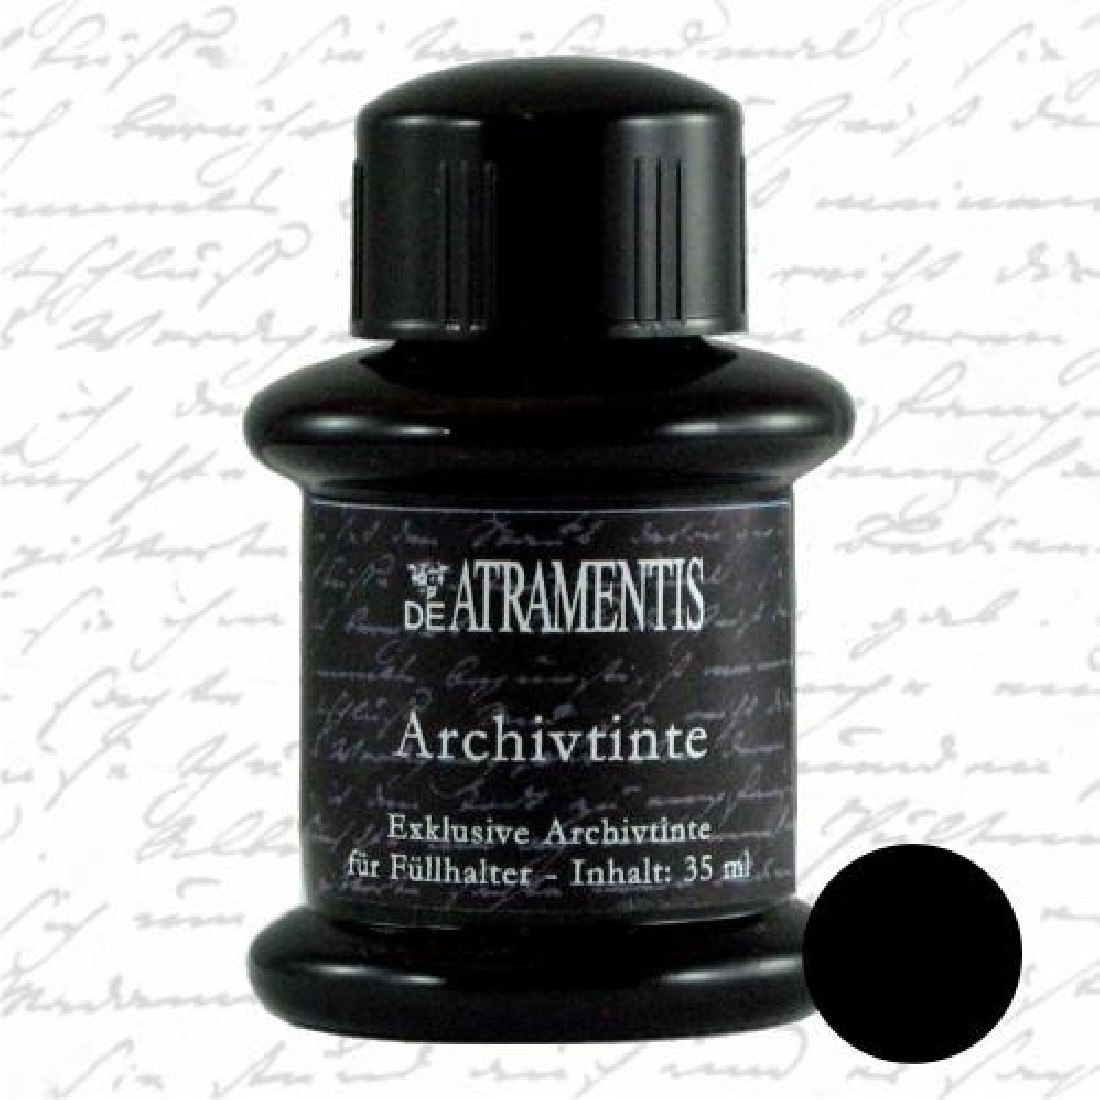 De Atramentis Archive 45ml fountain pen ink